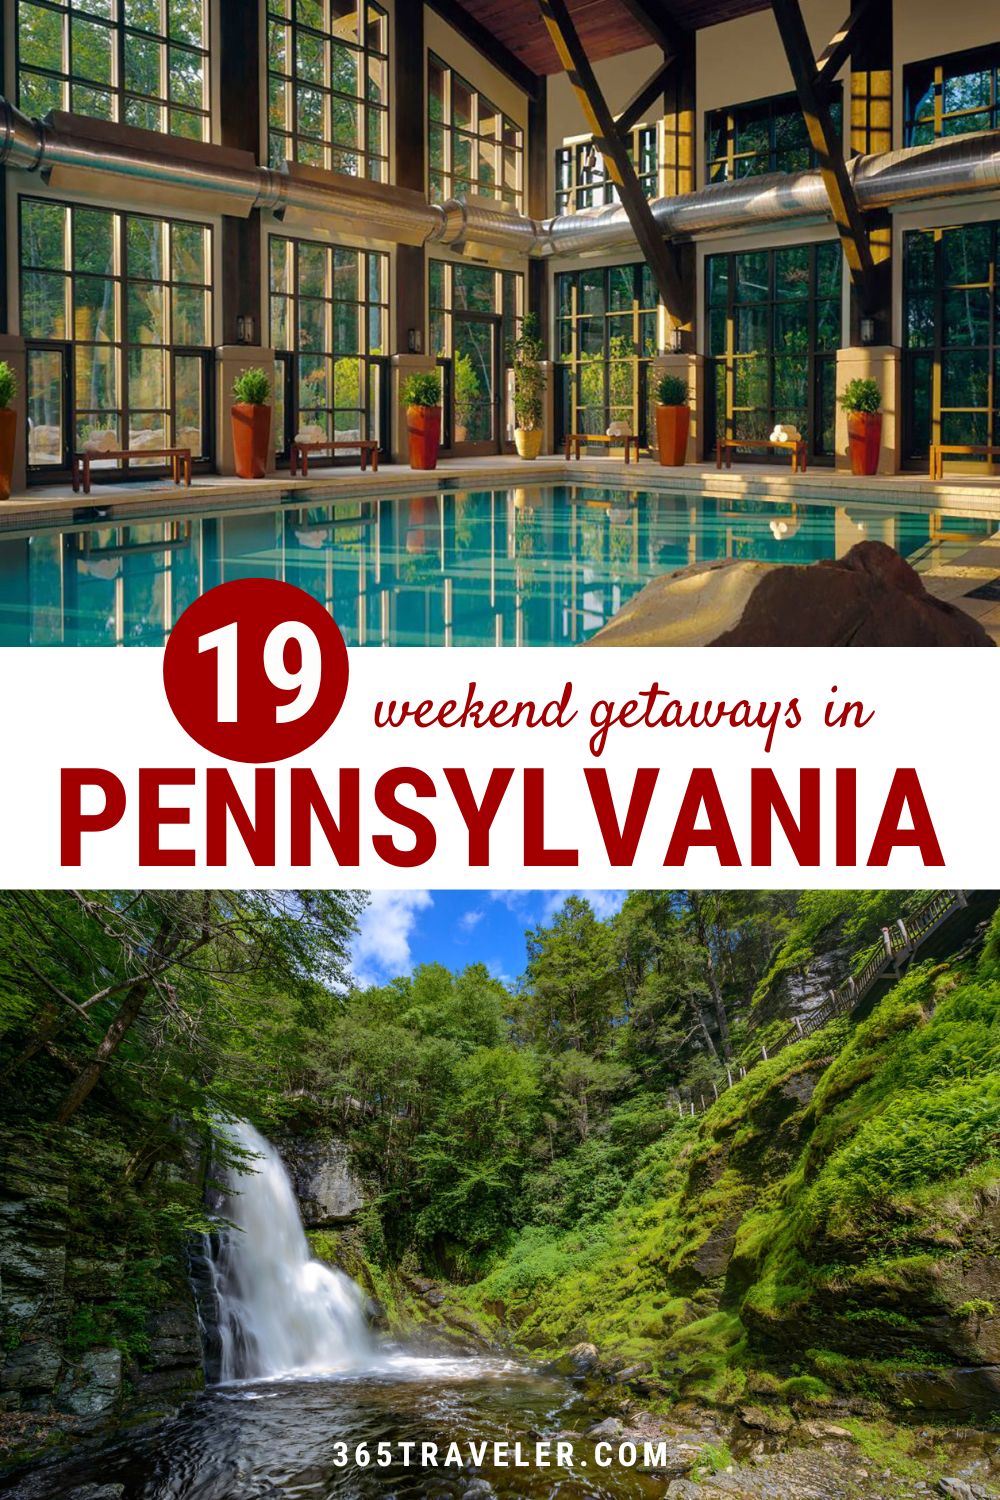 19 Amazing Weekend Getaways in Pa You’ll Love